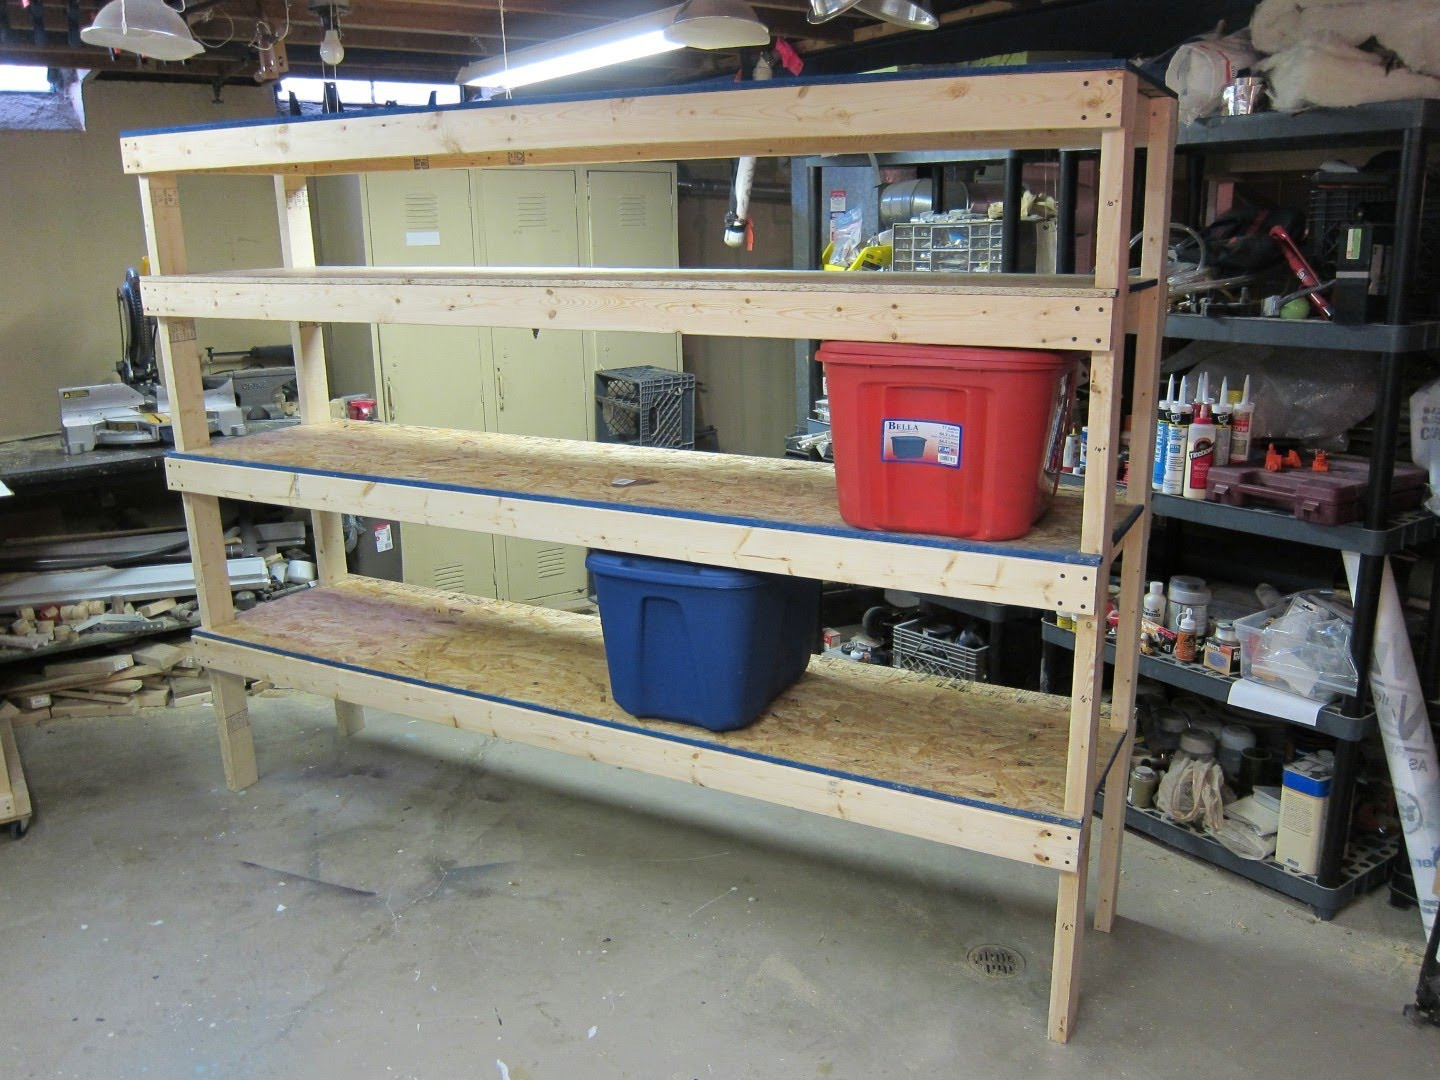 Best ideas about DIY Garage Build
. Save or Pin 20 DIY Garage Shelving Ideas Now.